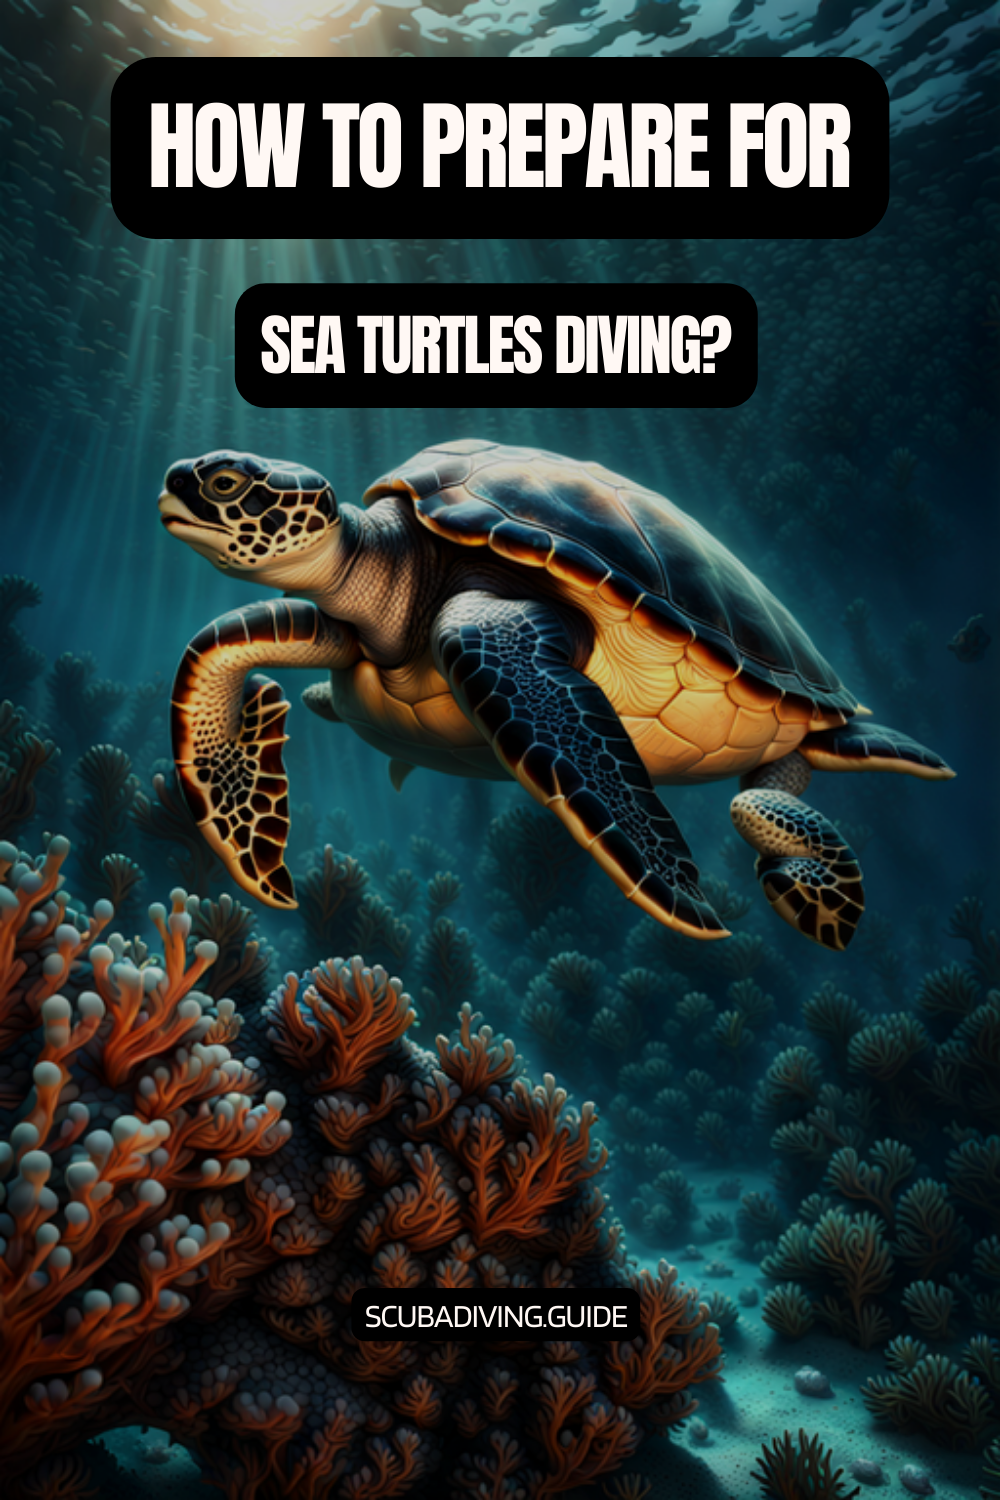 Preparing for a Sea Turtles Dive